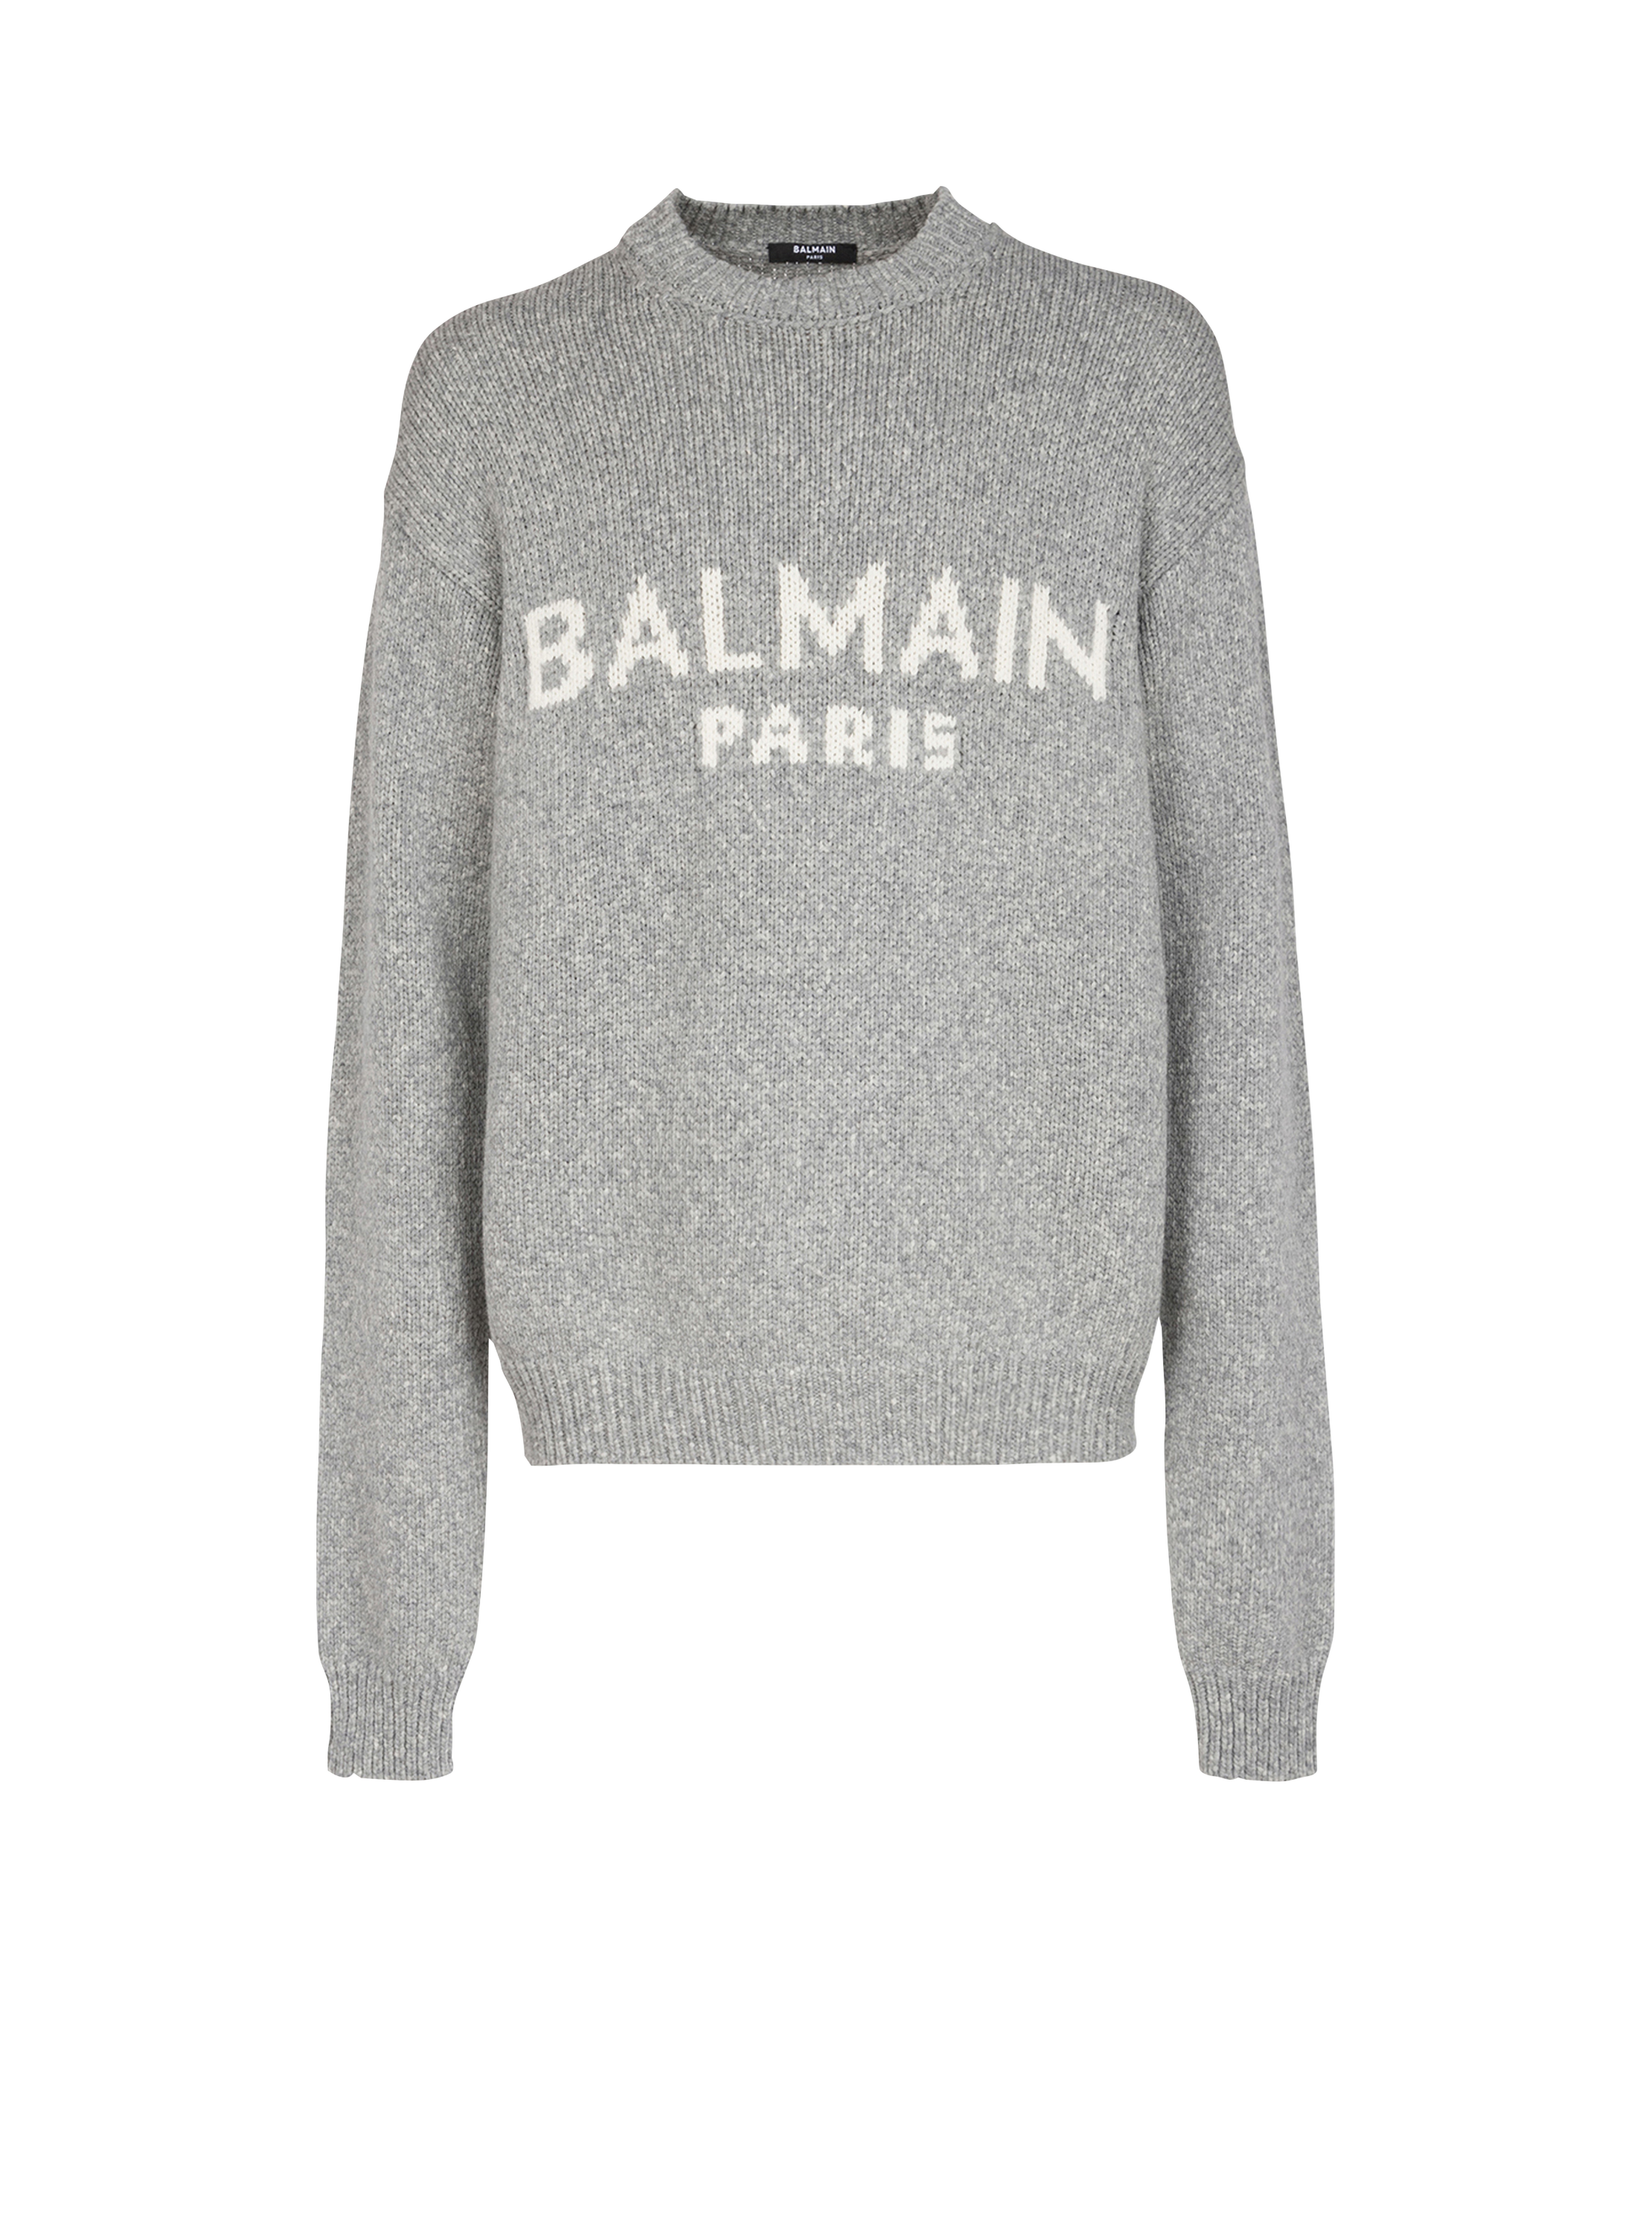 Wool sweater with Balmain Paris logo, grey